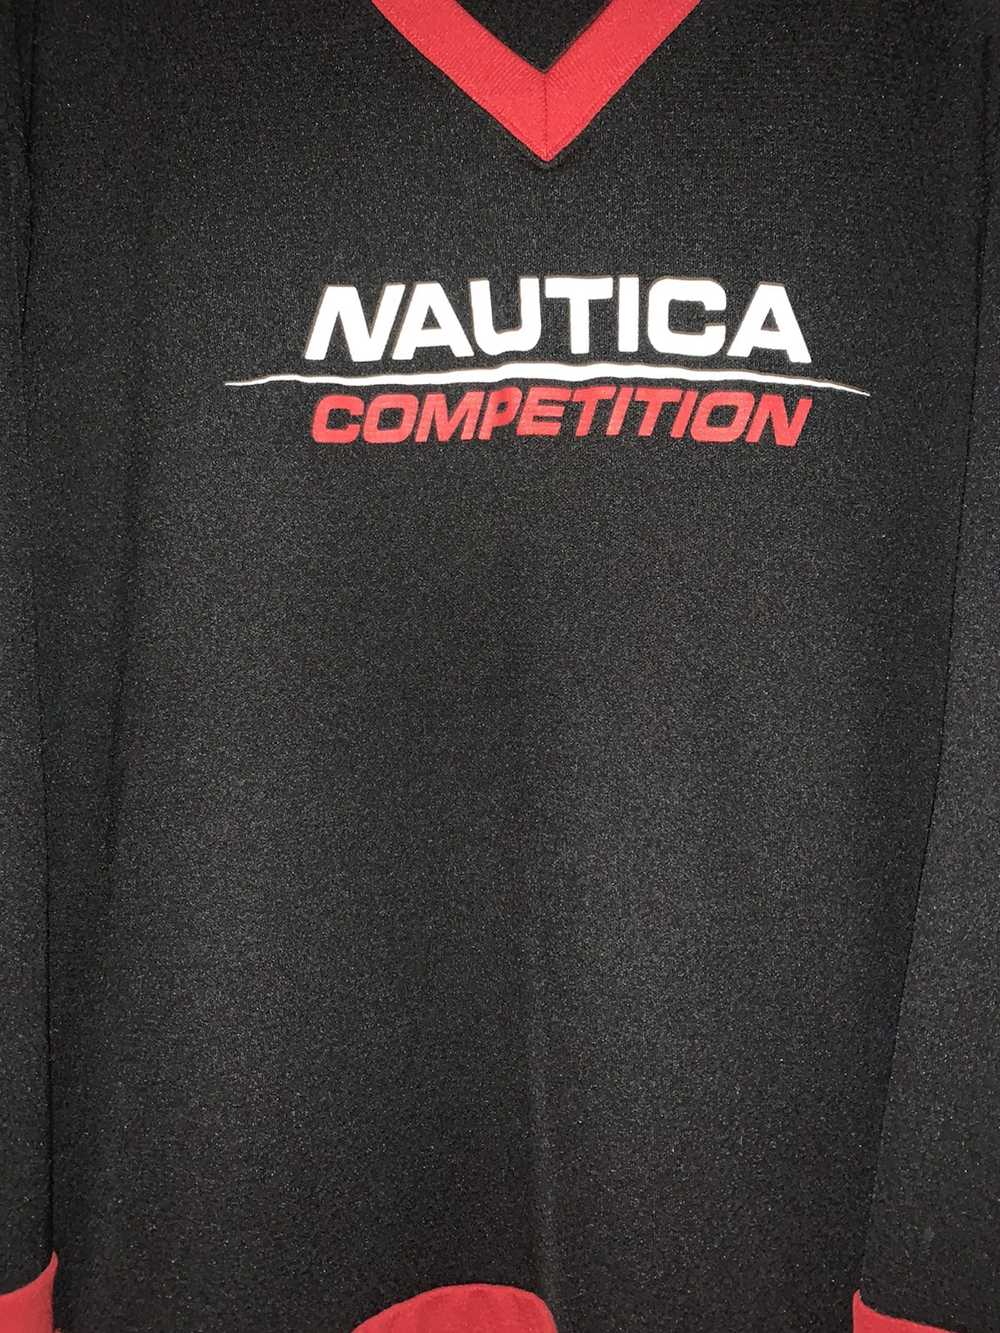 Nautica Vintage Nautica Competition Jersey Size XL - image 2